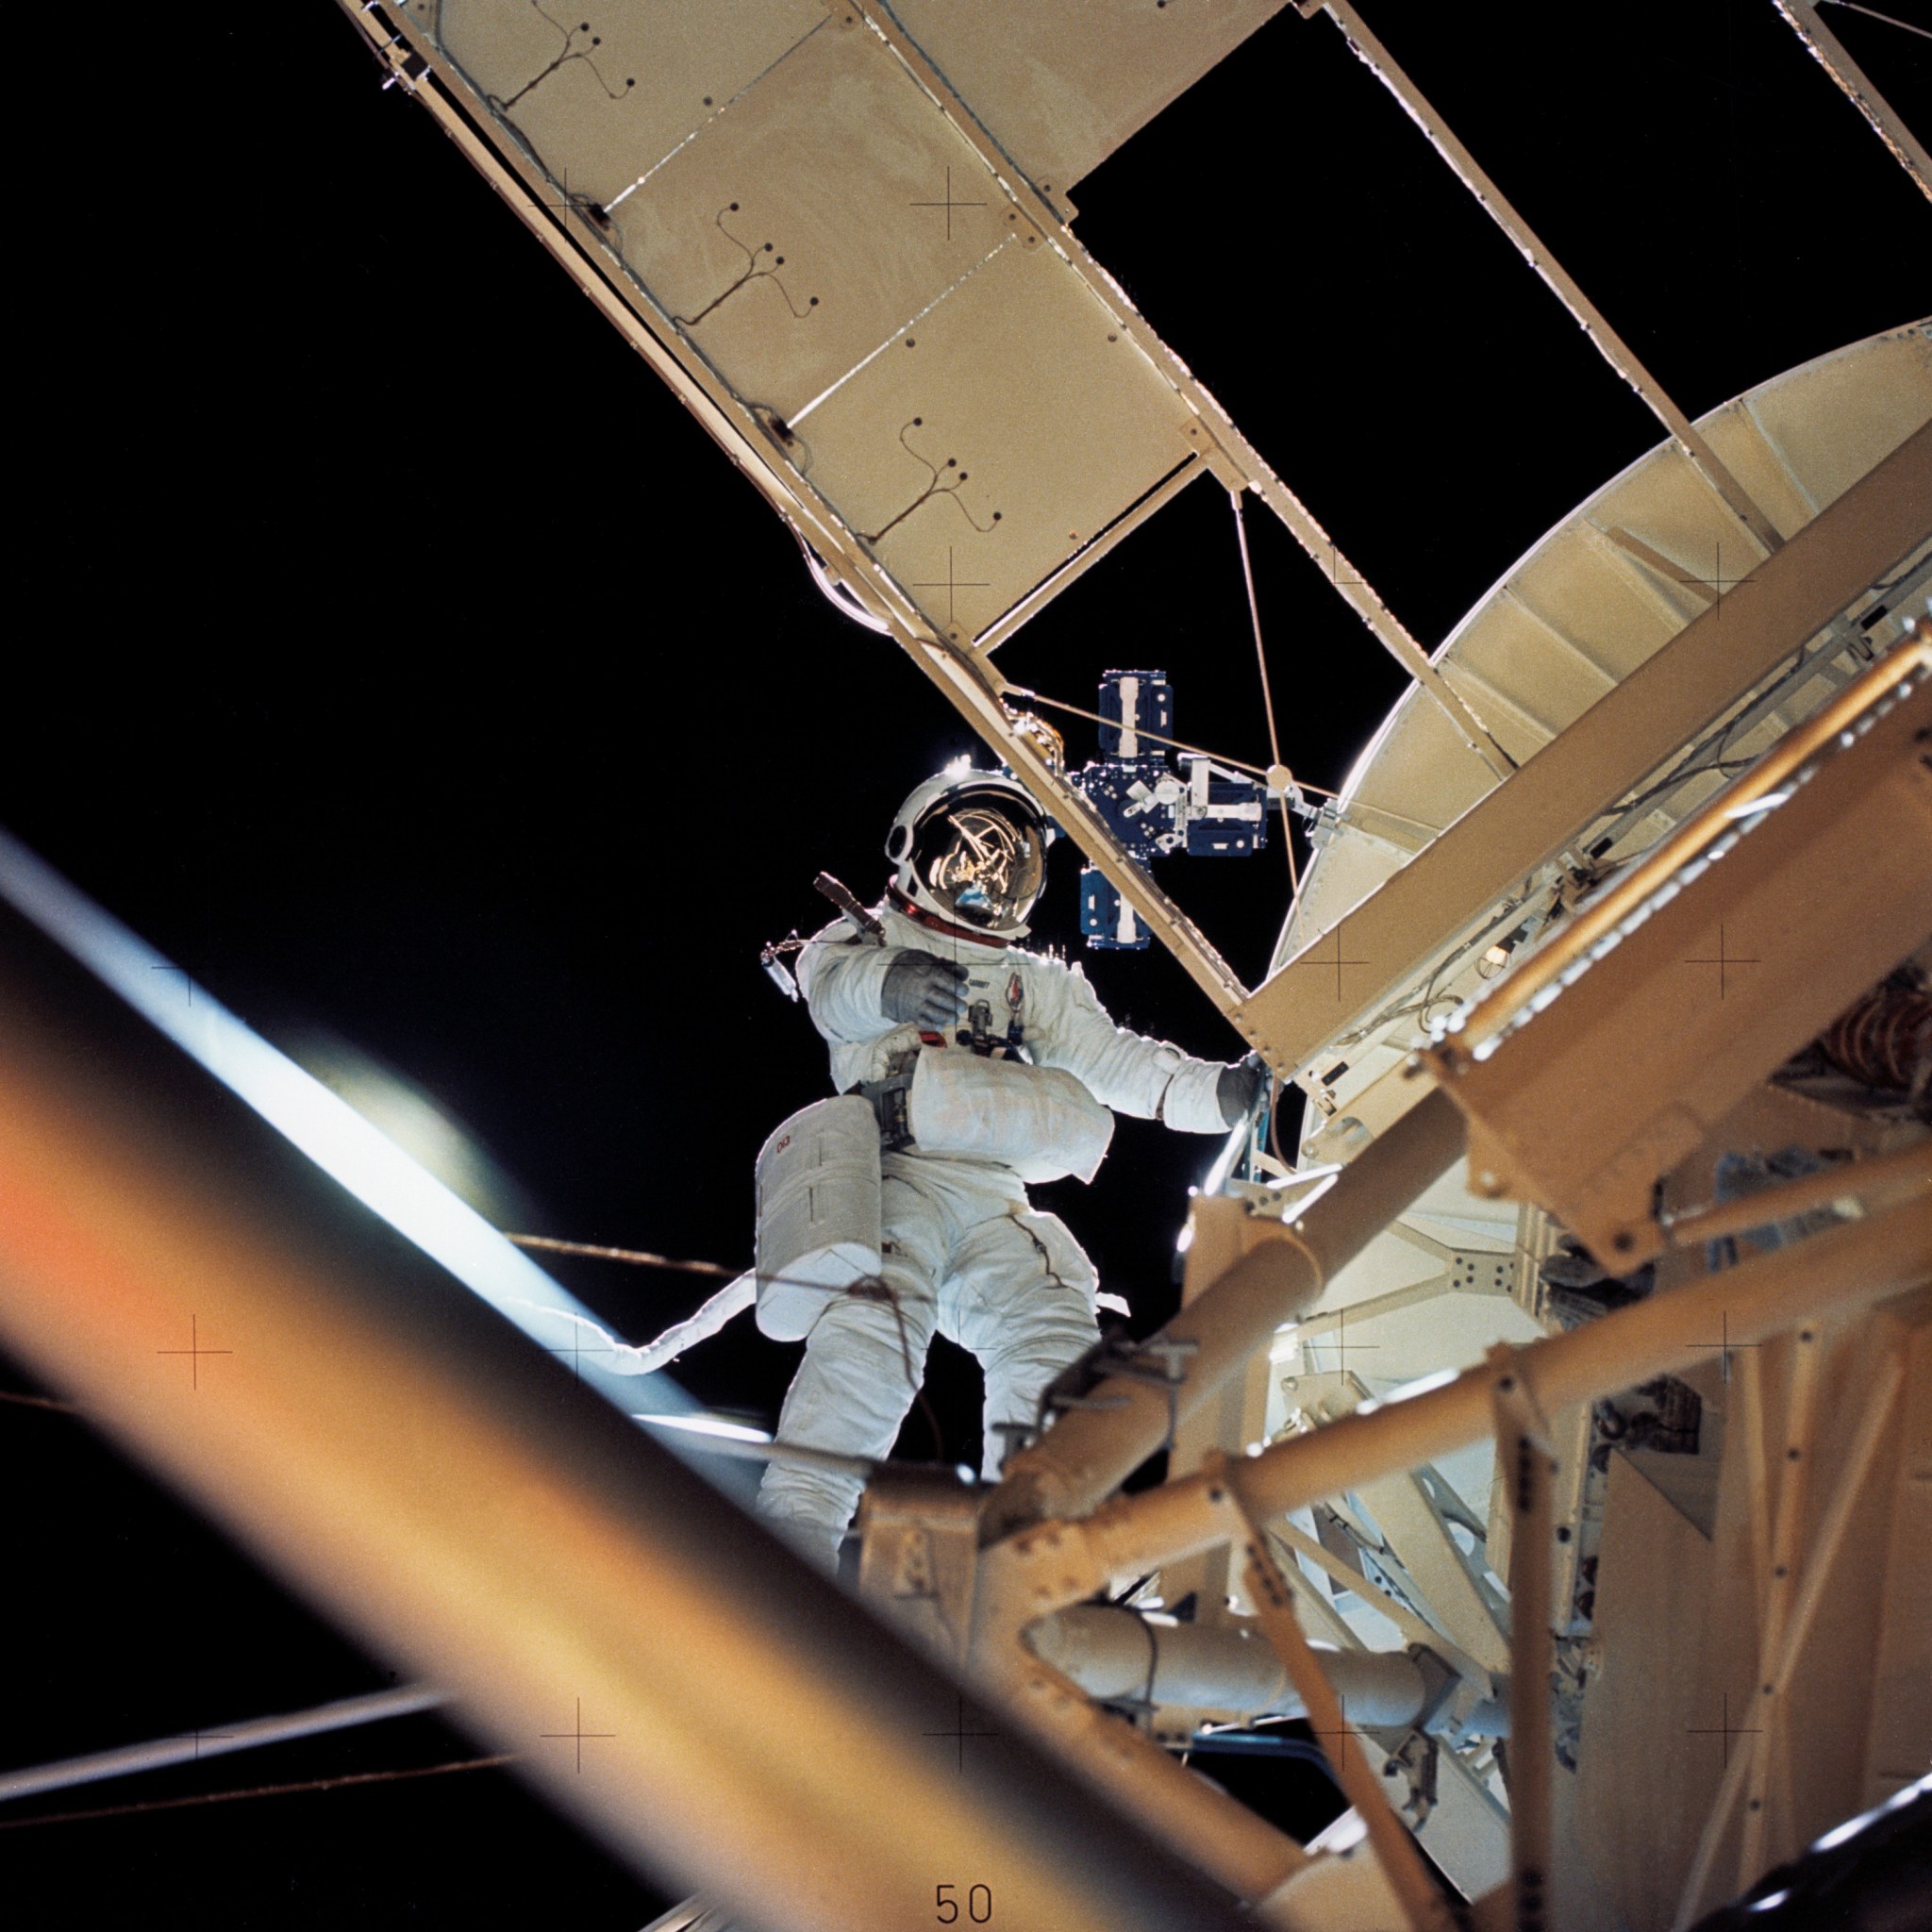 Scientist-astronaut Owen K. Garriott in spacesuit